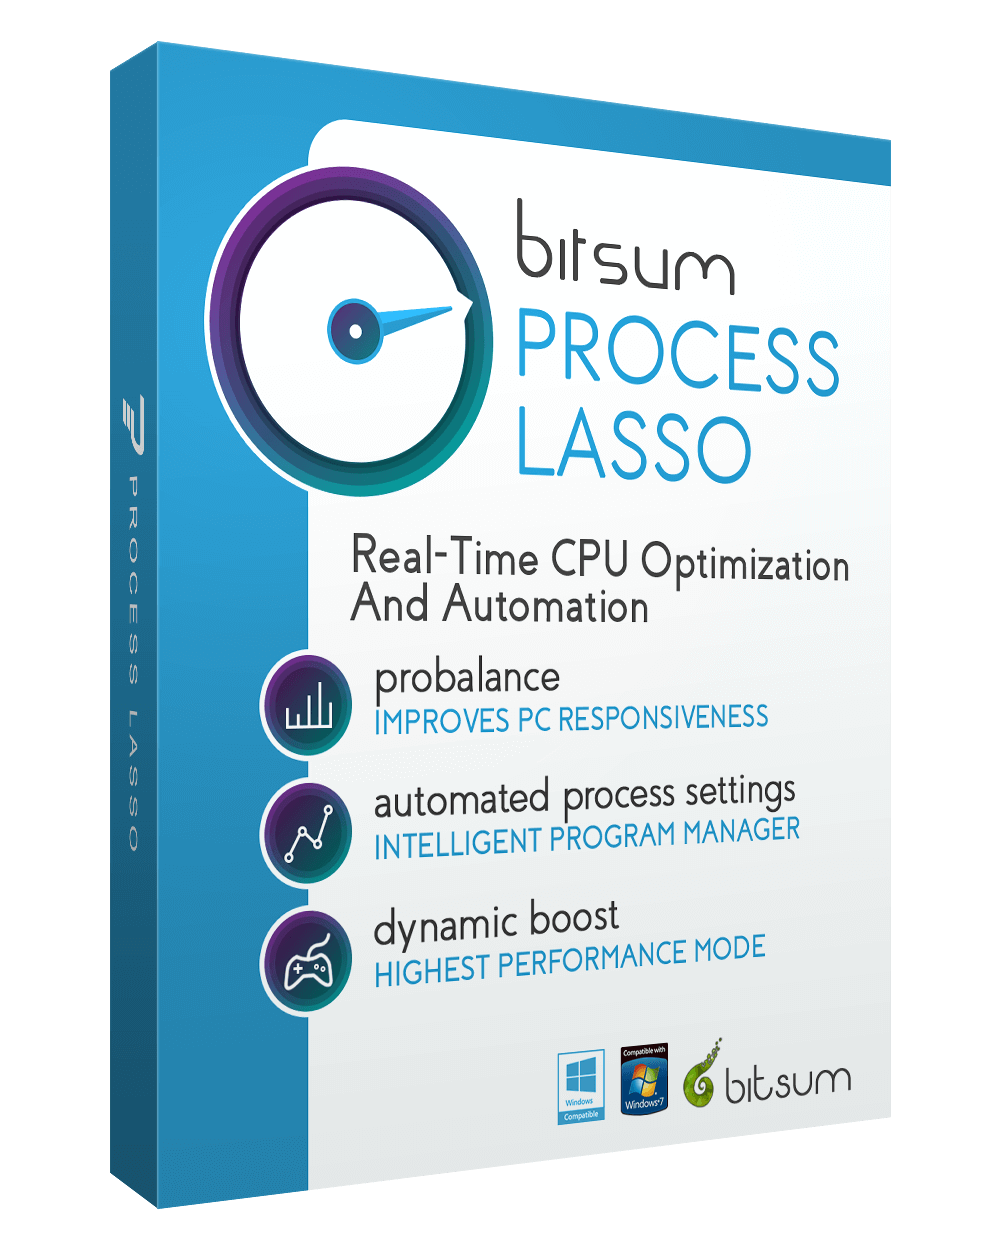 Process Lasso Pro 12.4.0.44 download the last version for windows